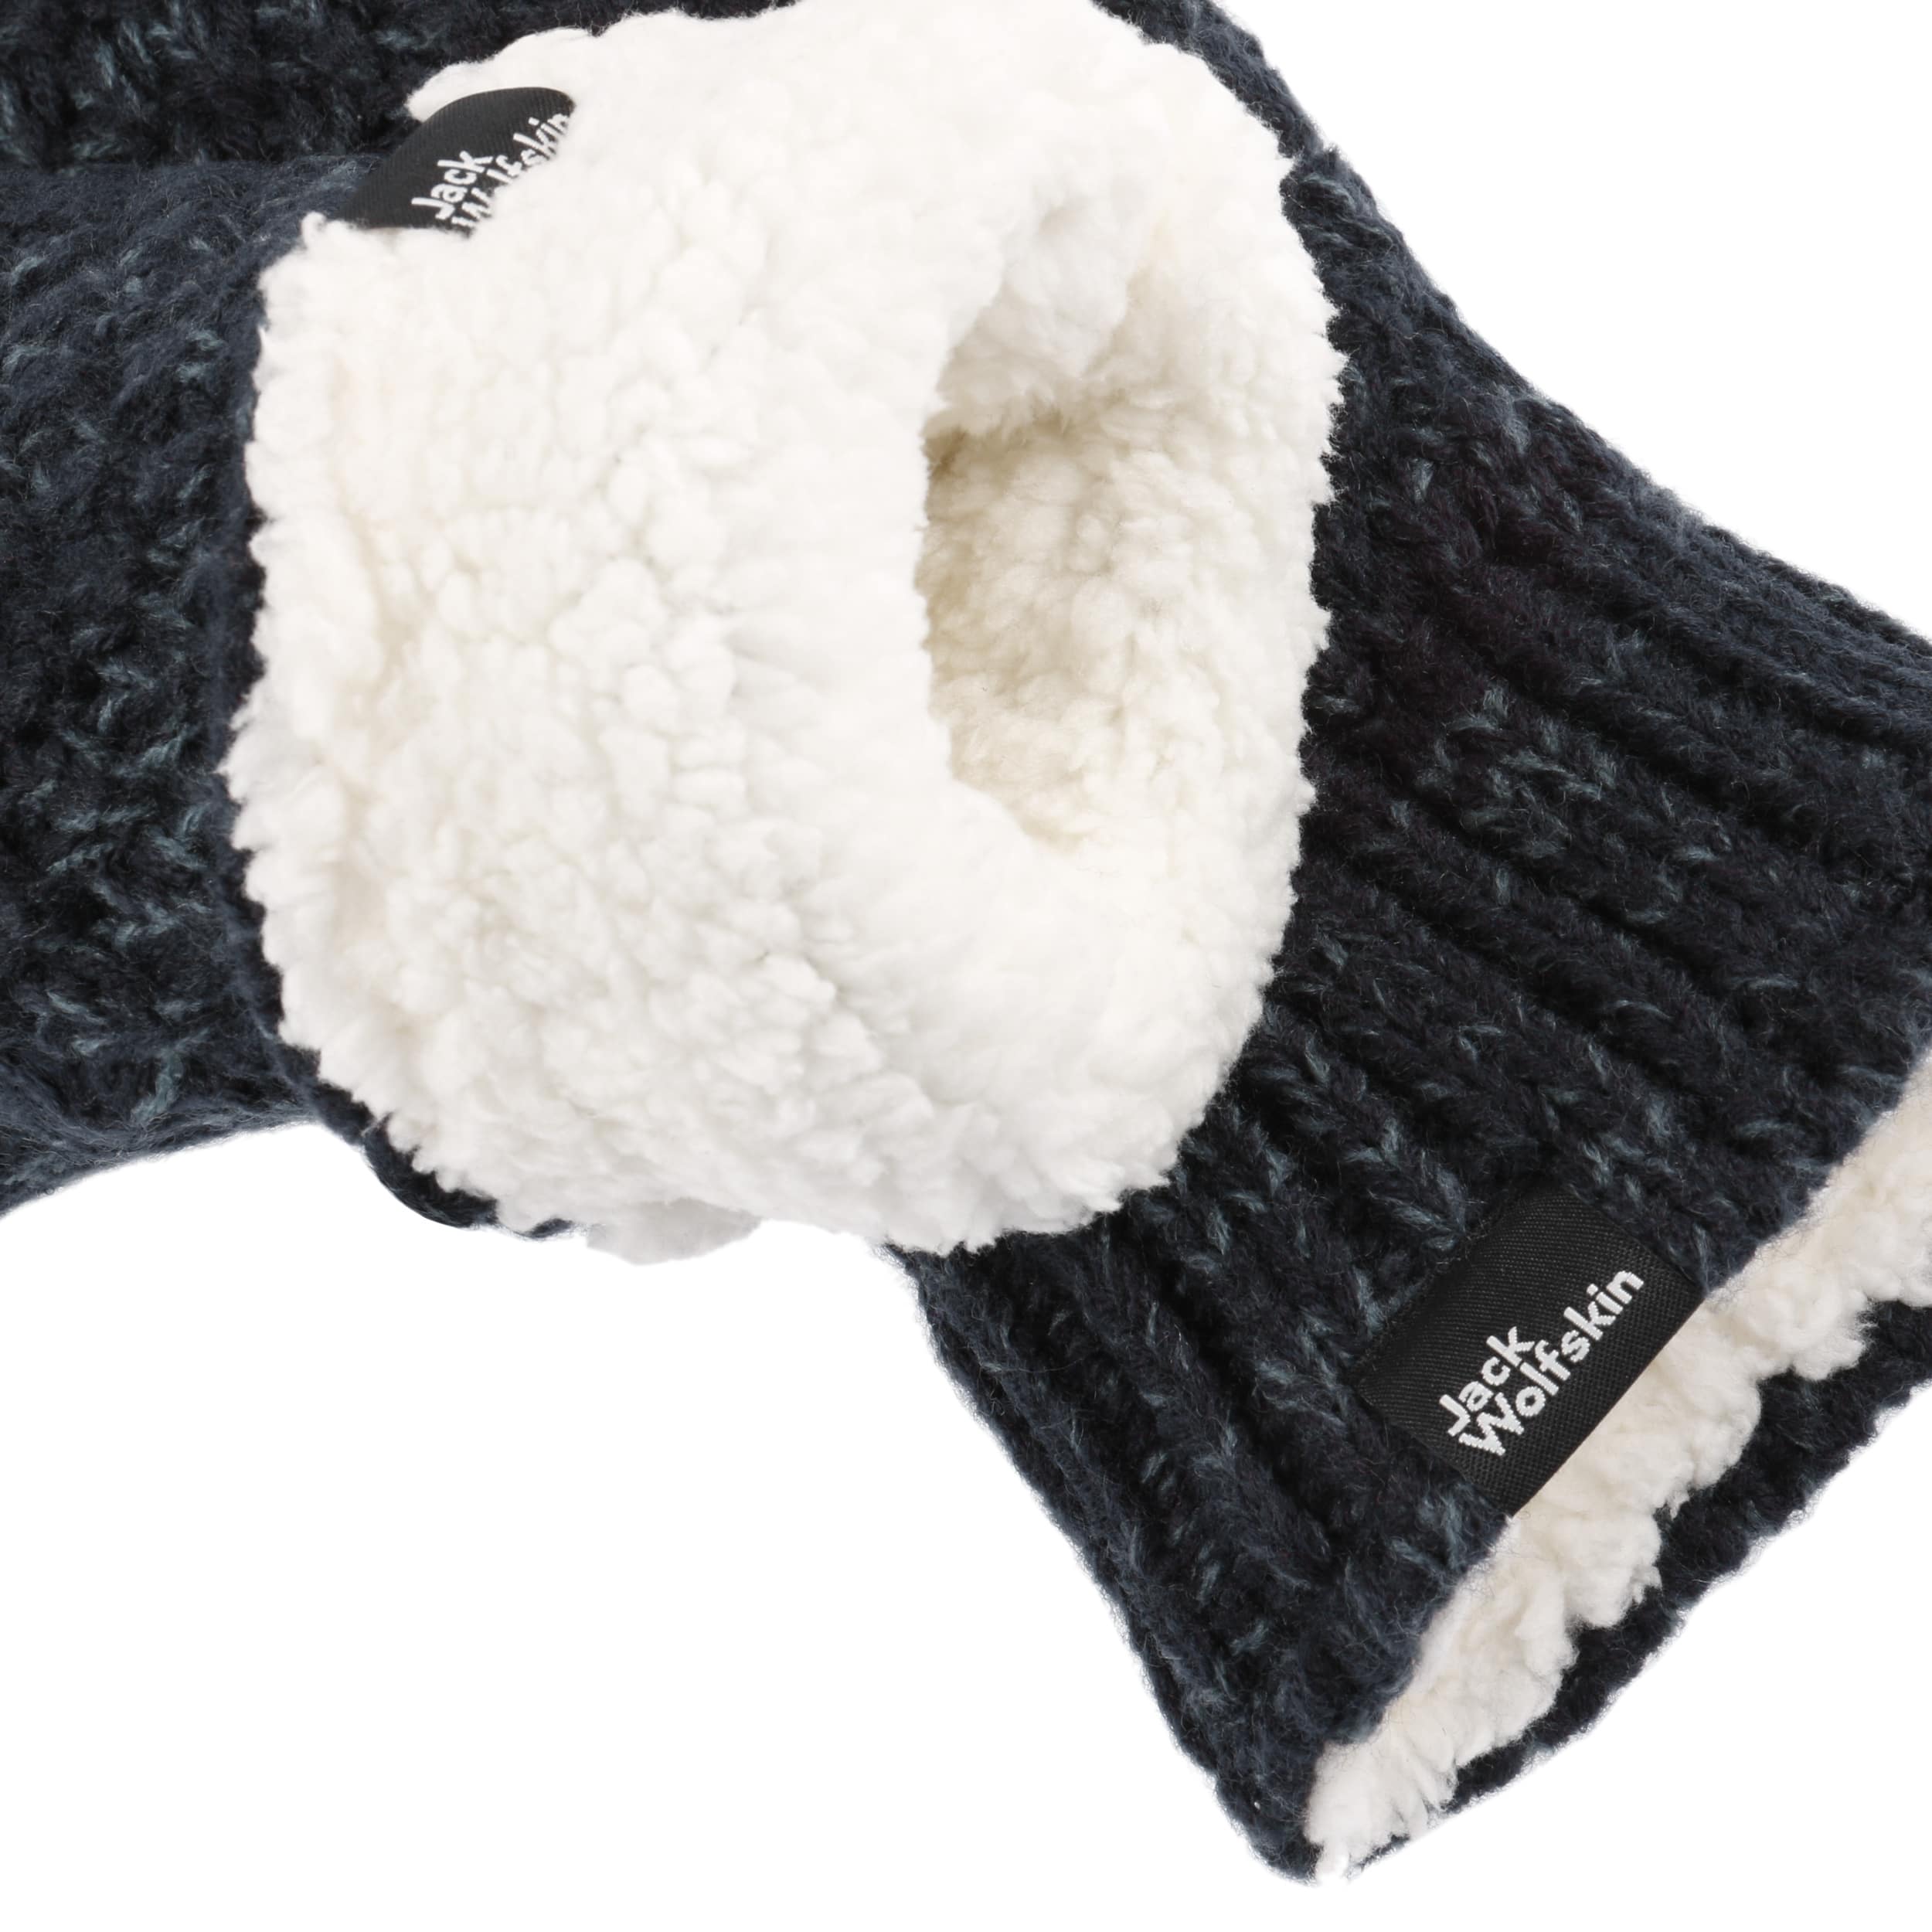 & Jack Hatshopping online ▷ Beanies Knit --> Caps Shop Wolfskin Highloft Hats, Mittens by